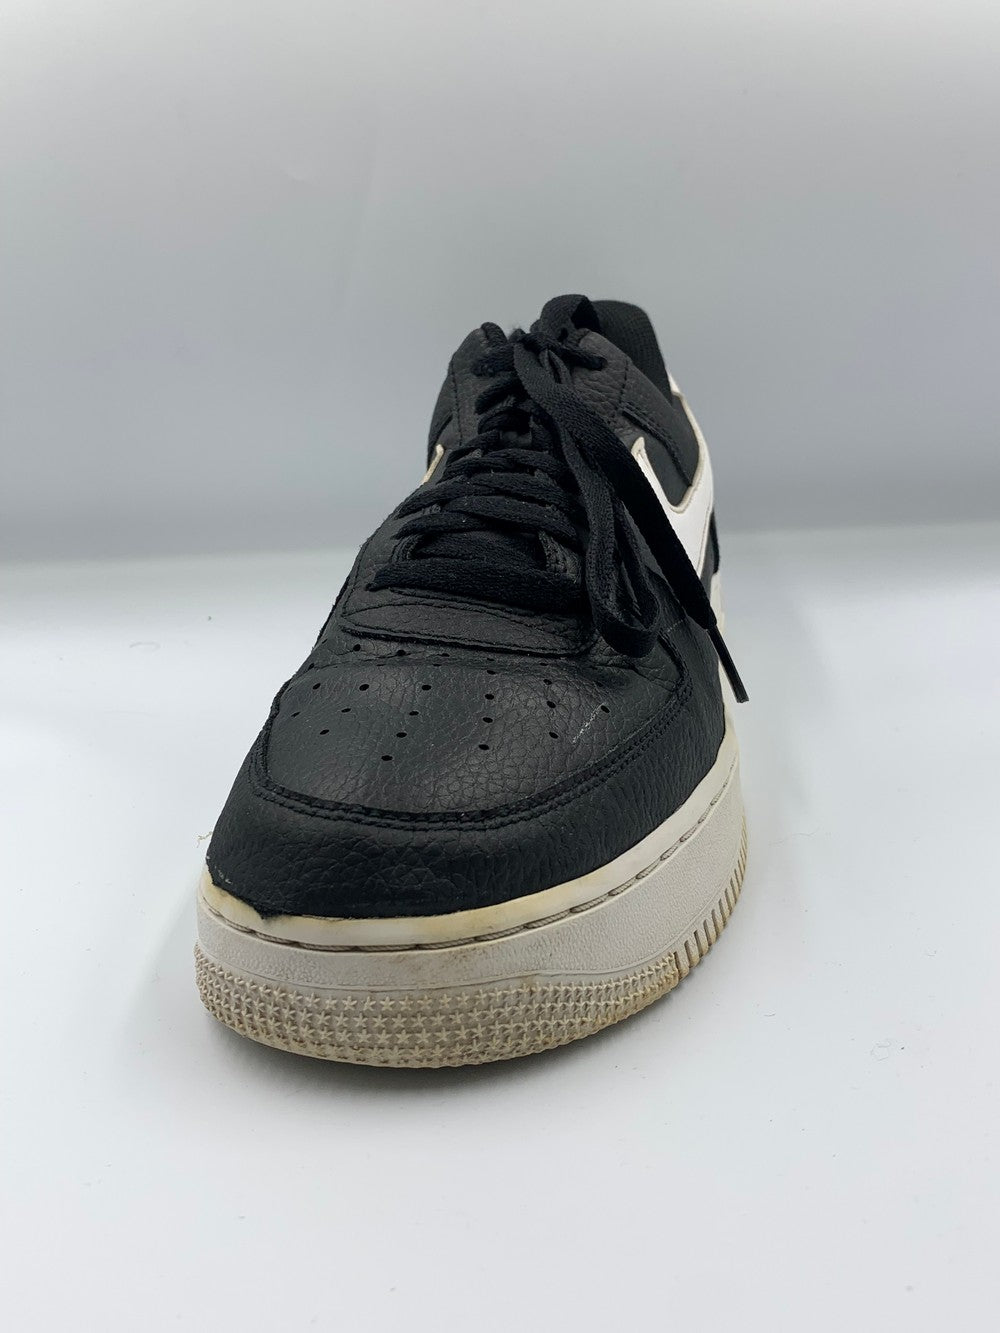 Nike Air Original Brand Sports Black Casual Shoes For Men